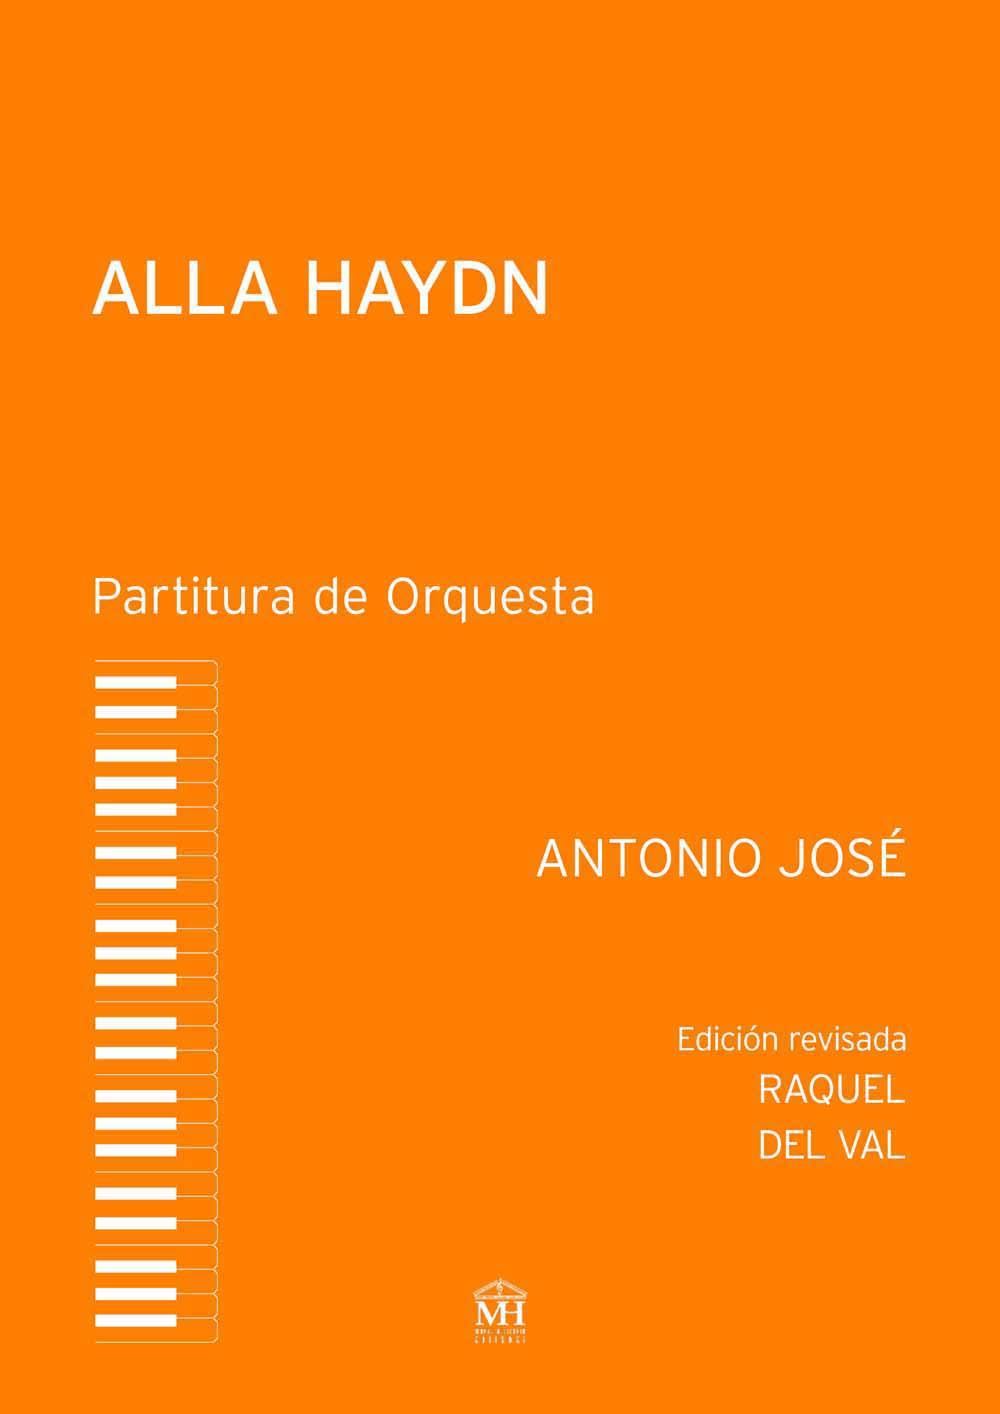 Alla Haydn